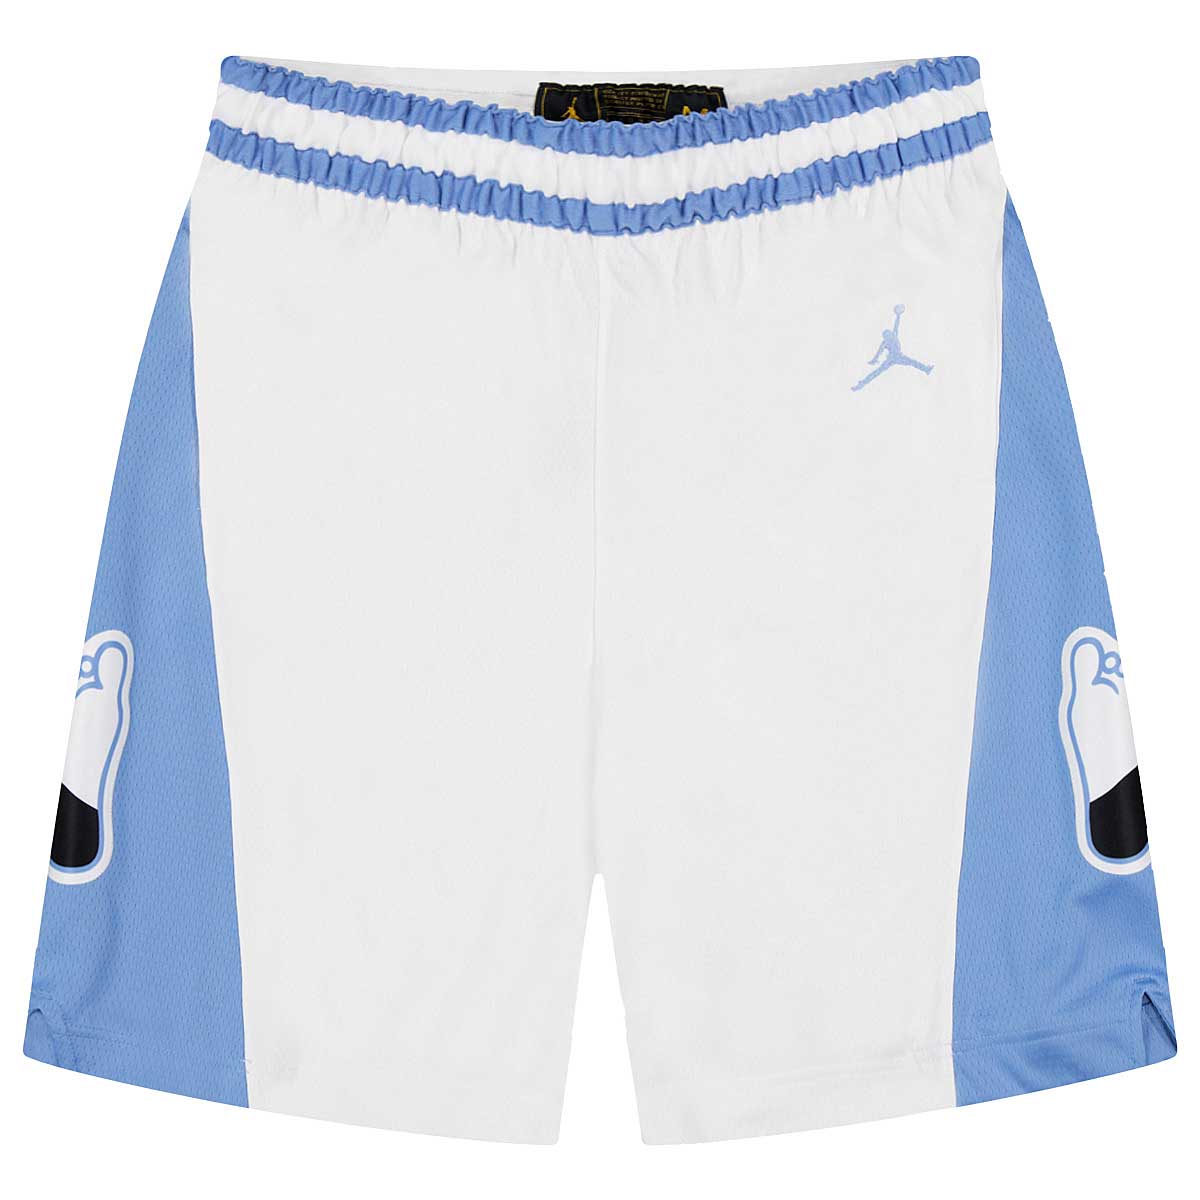 Jordan Ncaa North Carolina Tarheels Retro Limited Edition Shorts, Weiß/valor Blau/valor Blau L